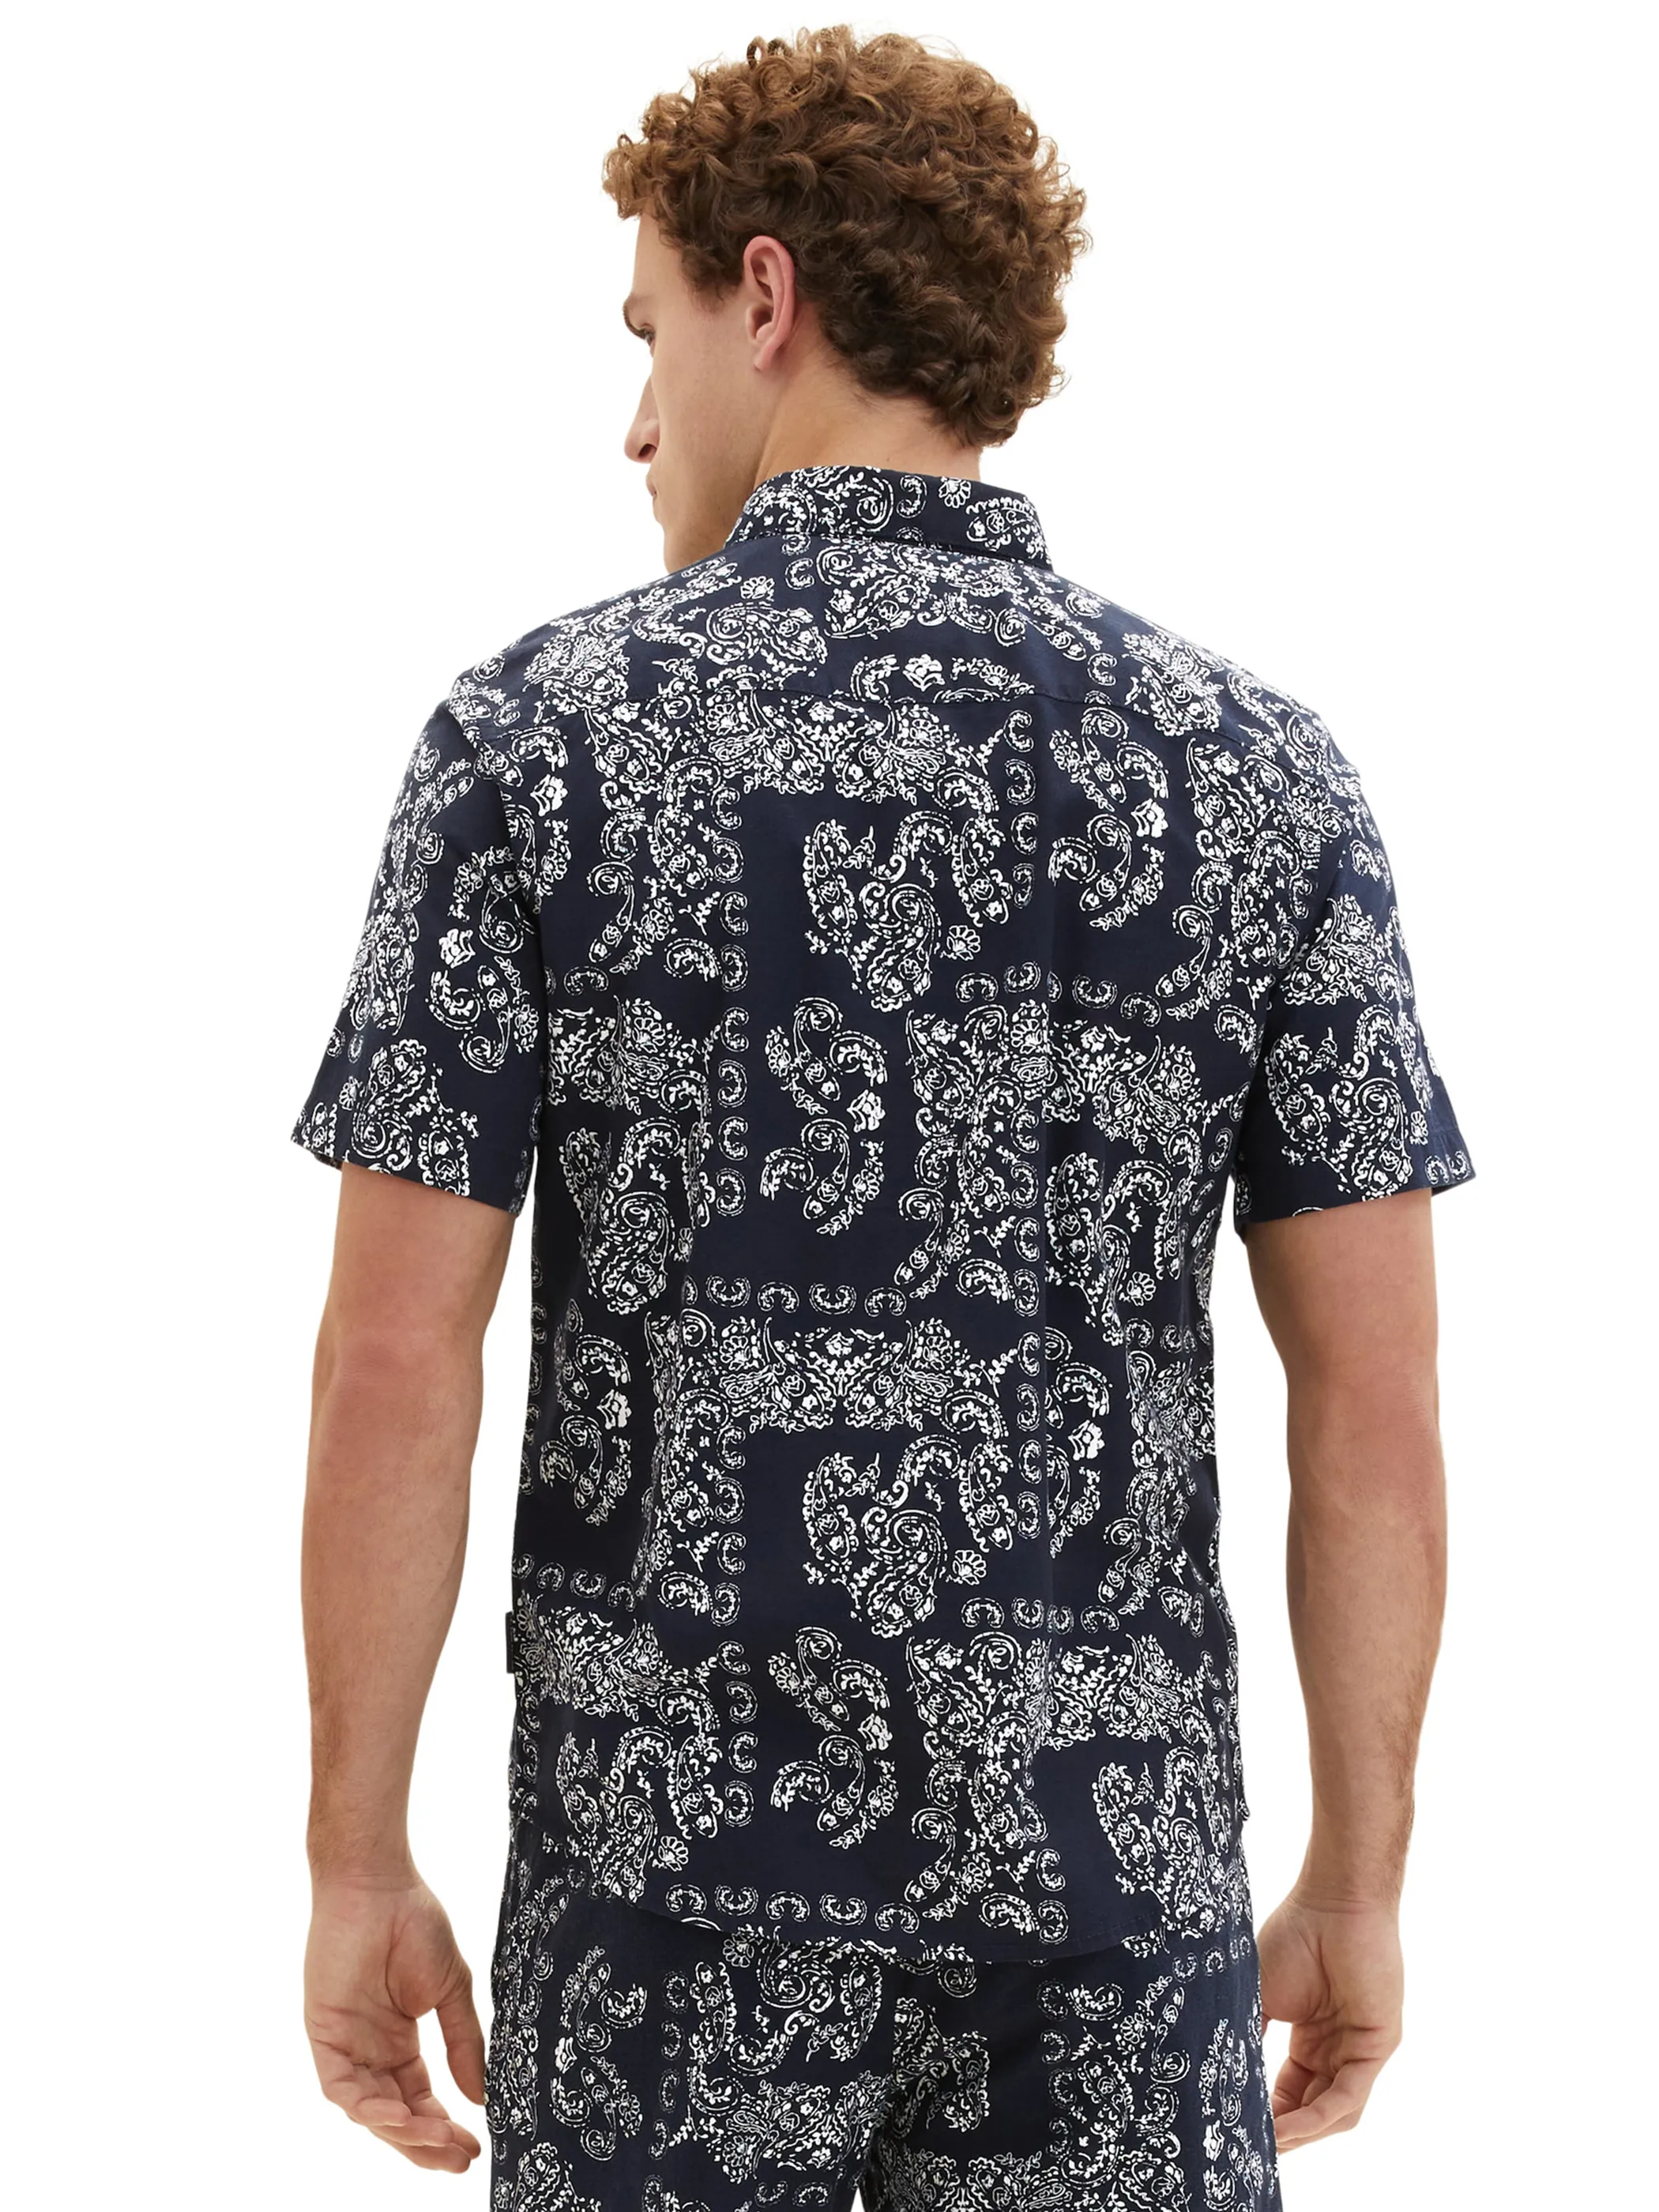 Tom Tailor 1036218 printed paisley shirt Blau 880557 31783 2